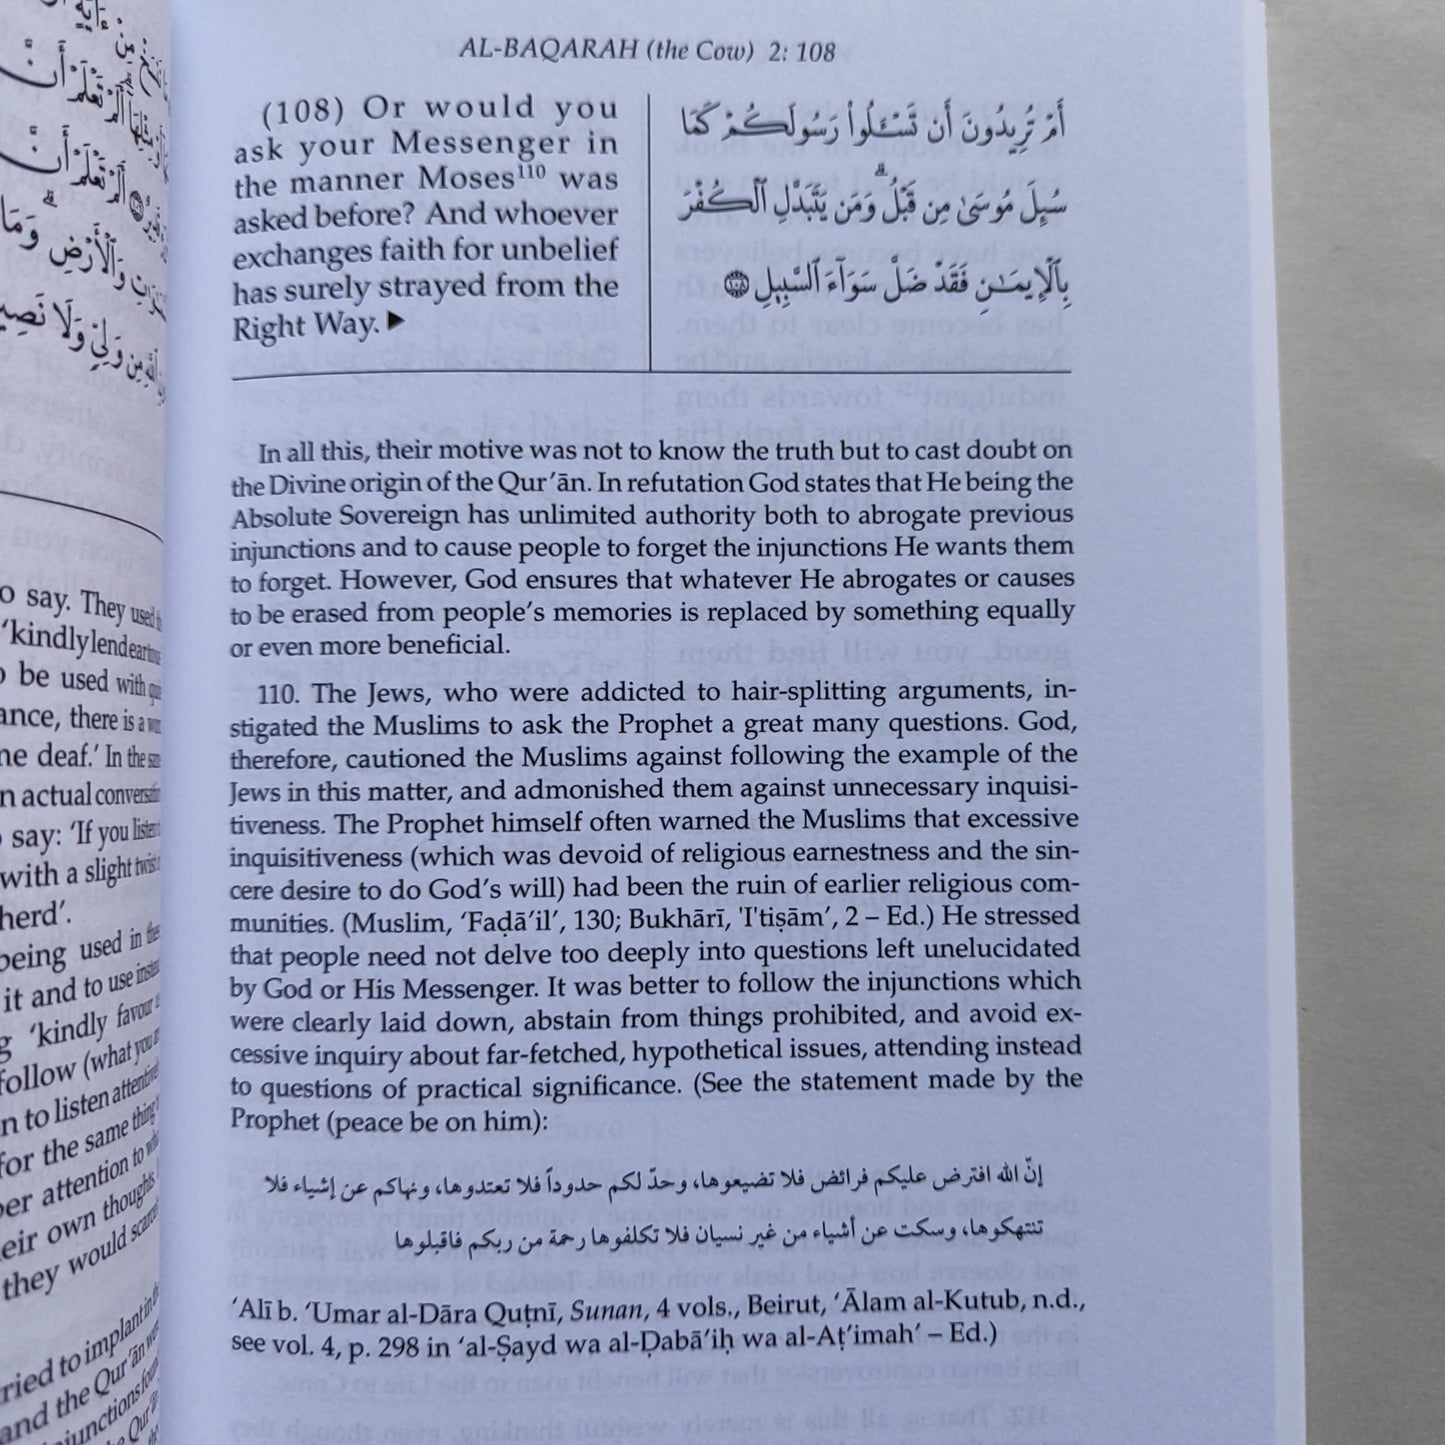 Towards Understanding The Quran (Tafhim Al- Quran) Volume 1